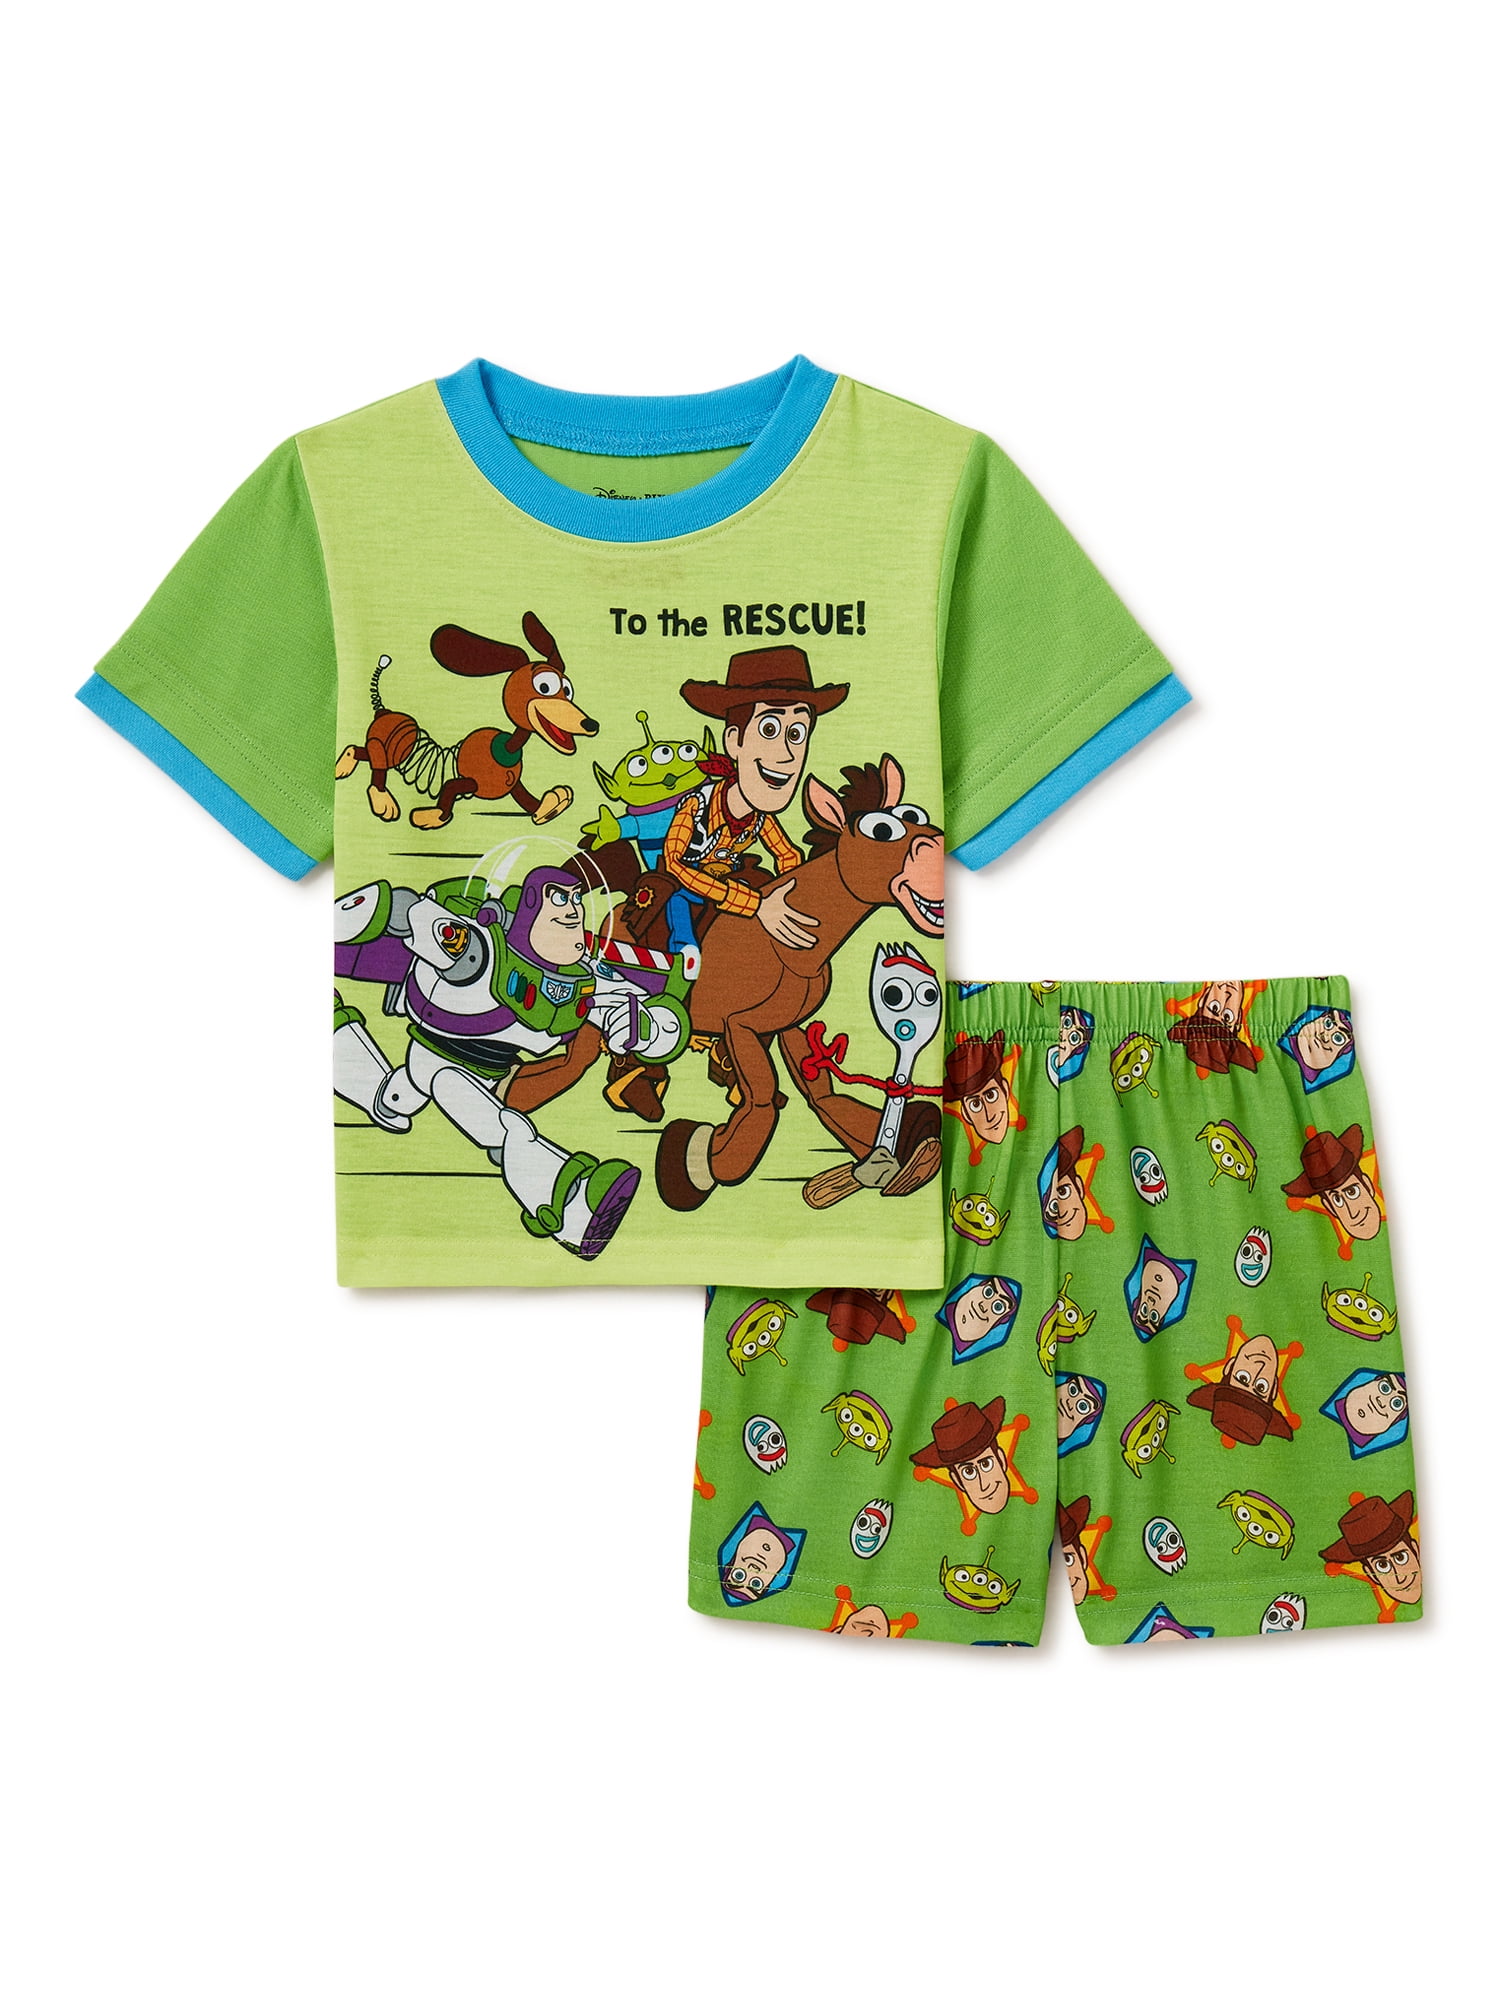 Toy Story Pajamas 2 pcs Set Baby Toddler Kid's Boys Sleepwear Disney Buzz Woody